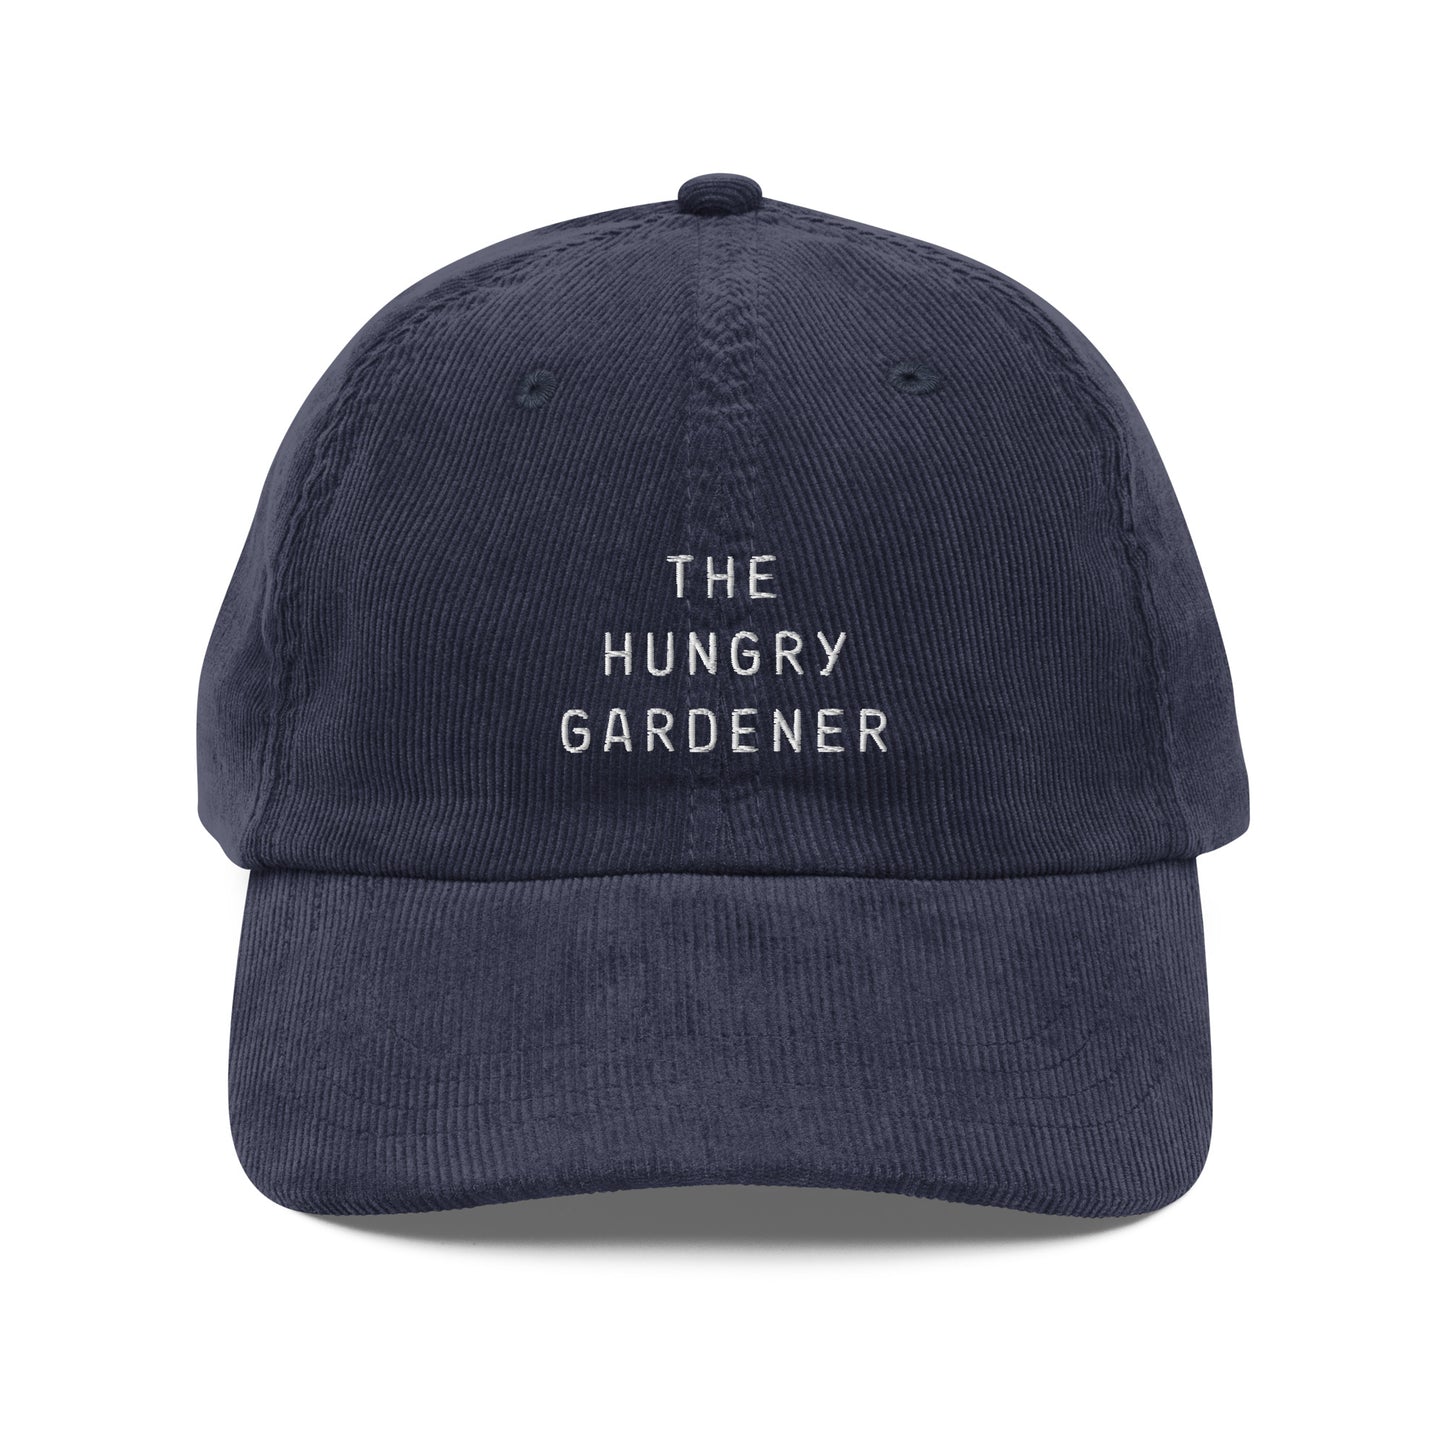 Hungry Gardener Vintage Corduroy Cap